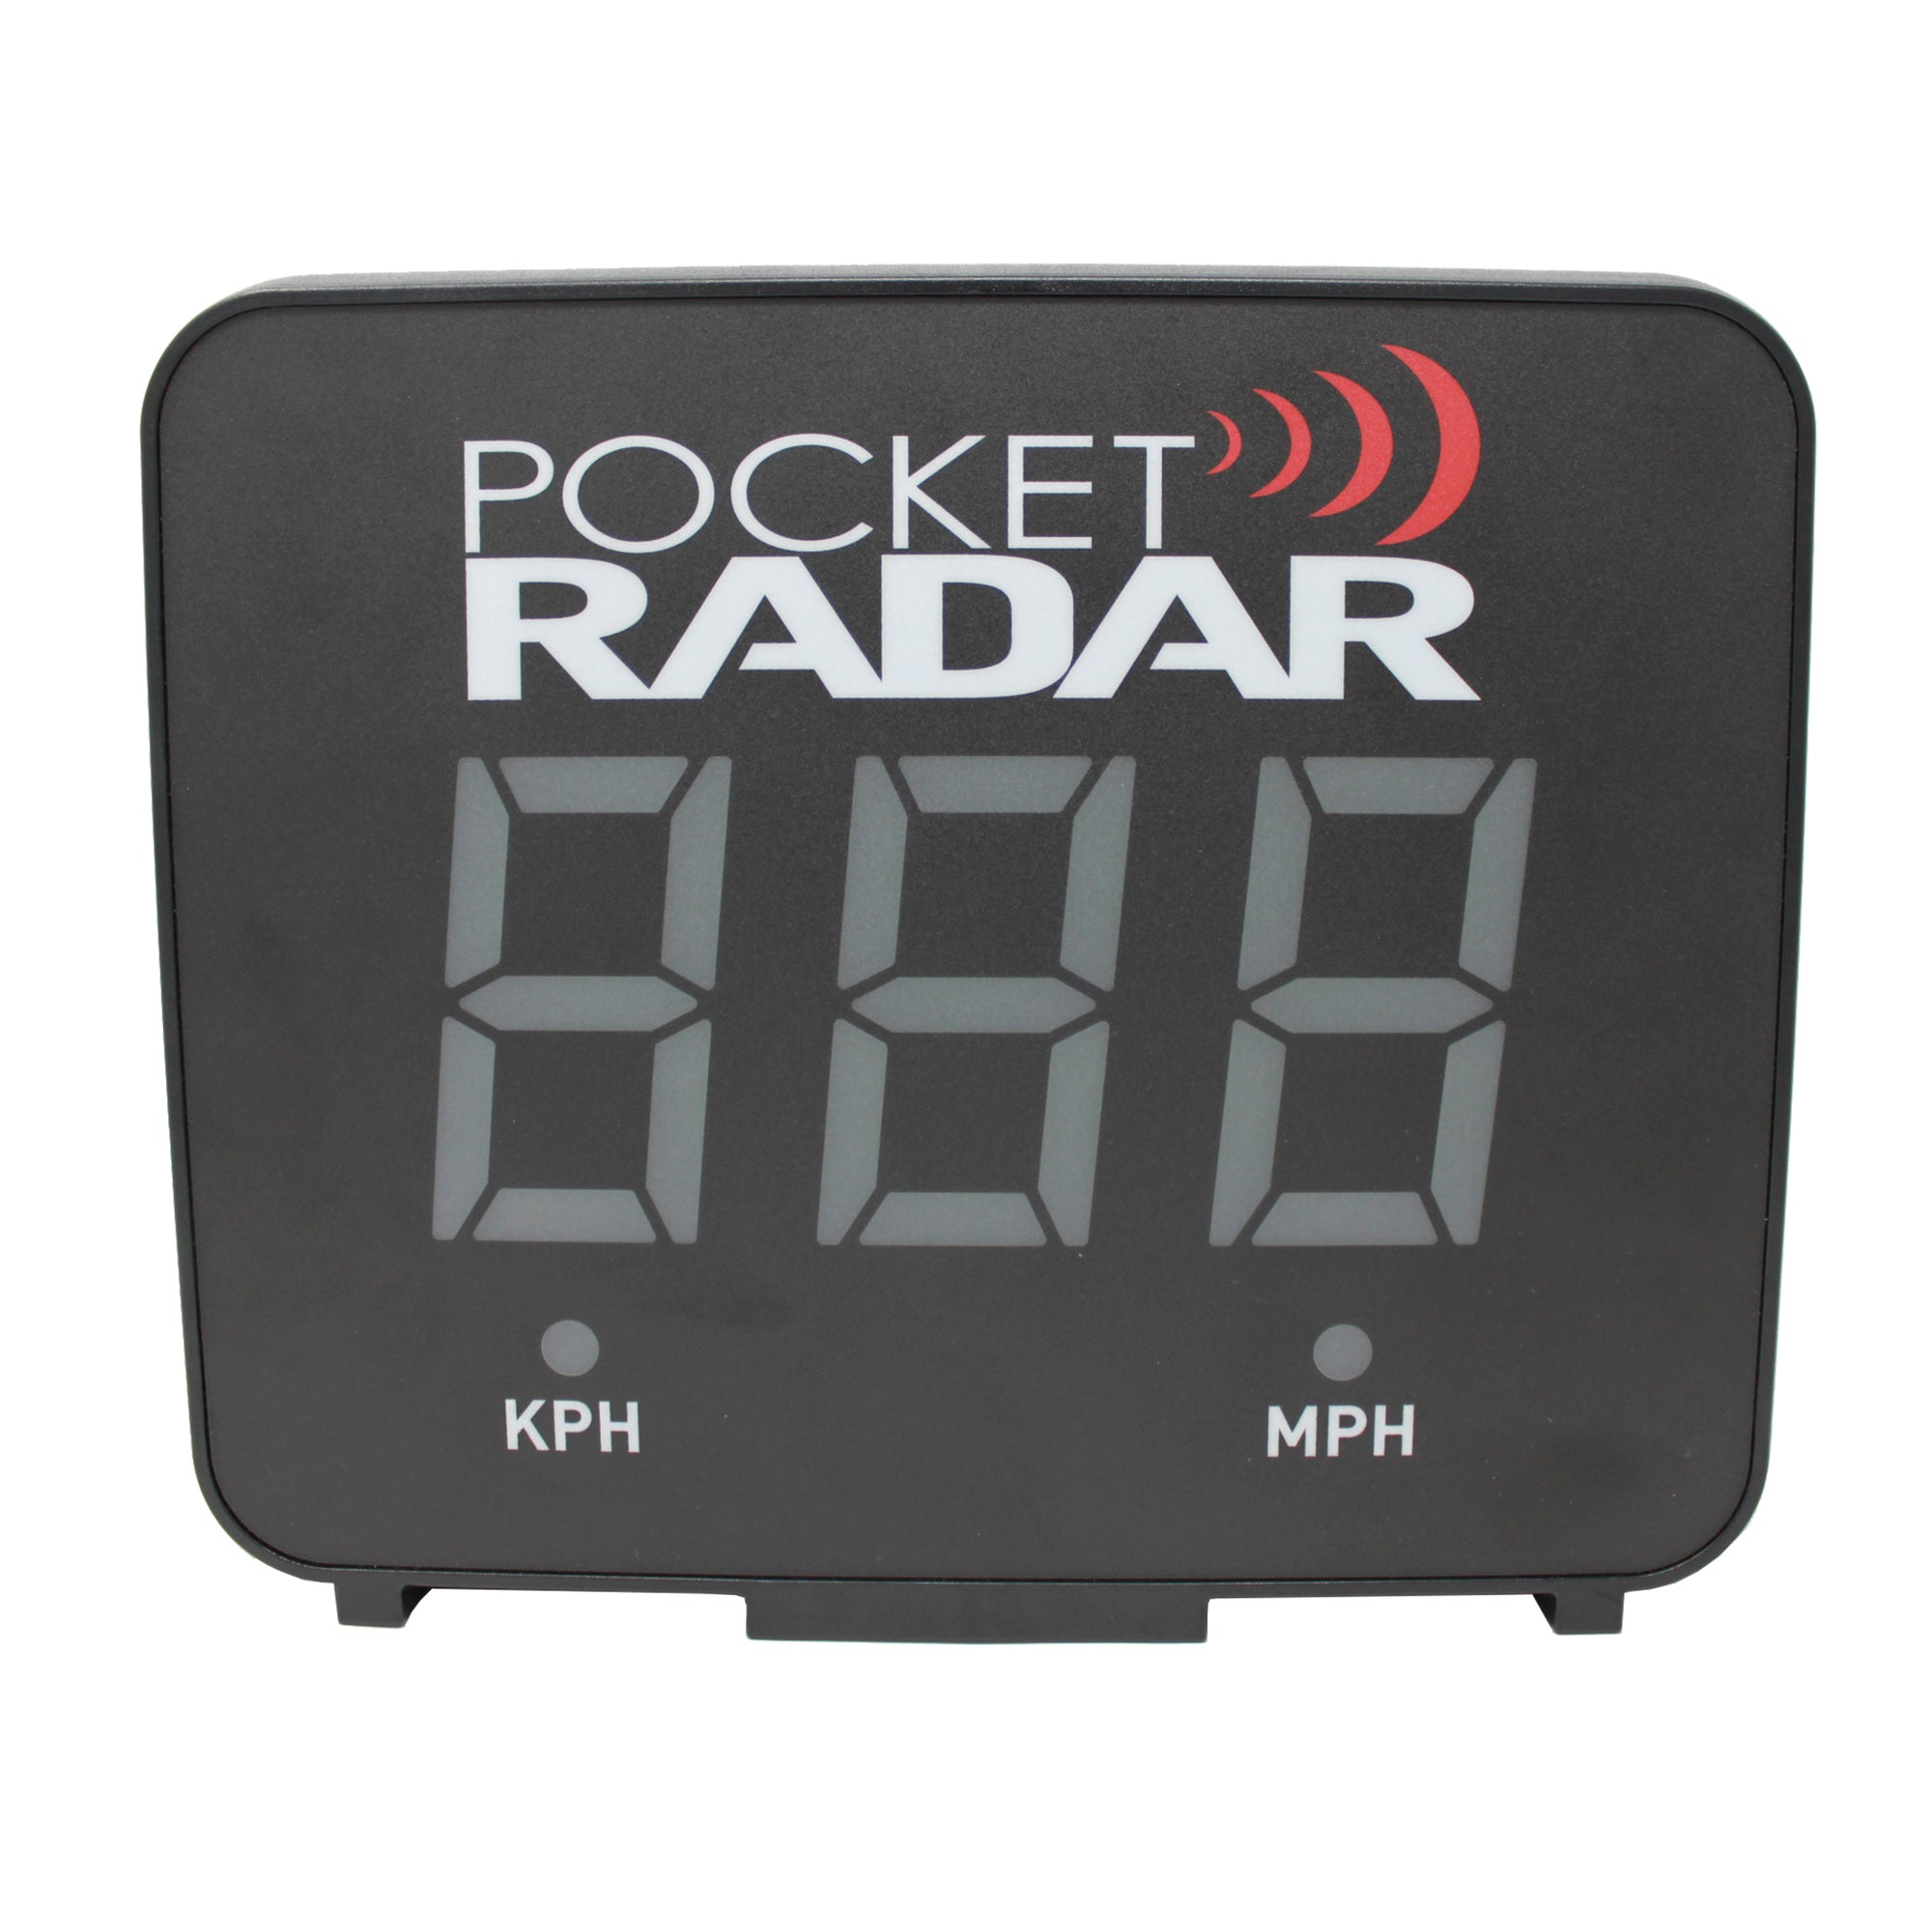 smart coach pocket radar used